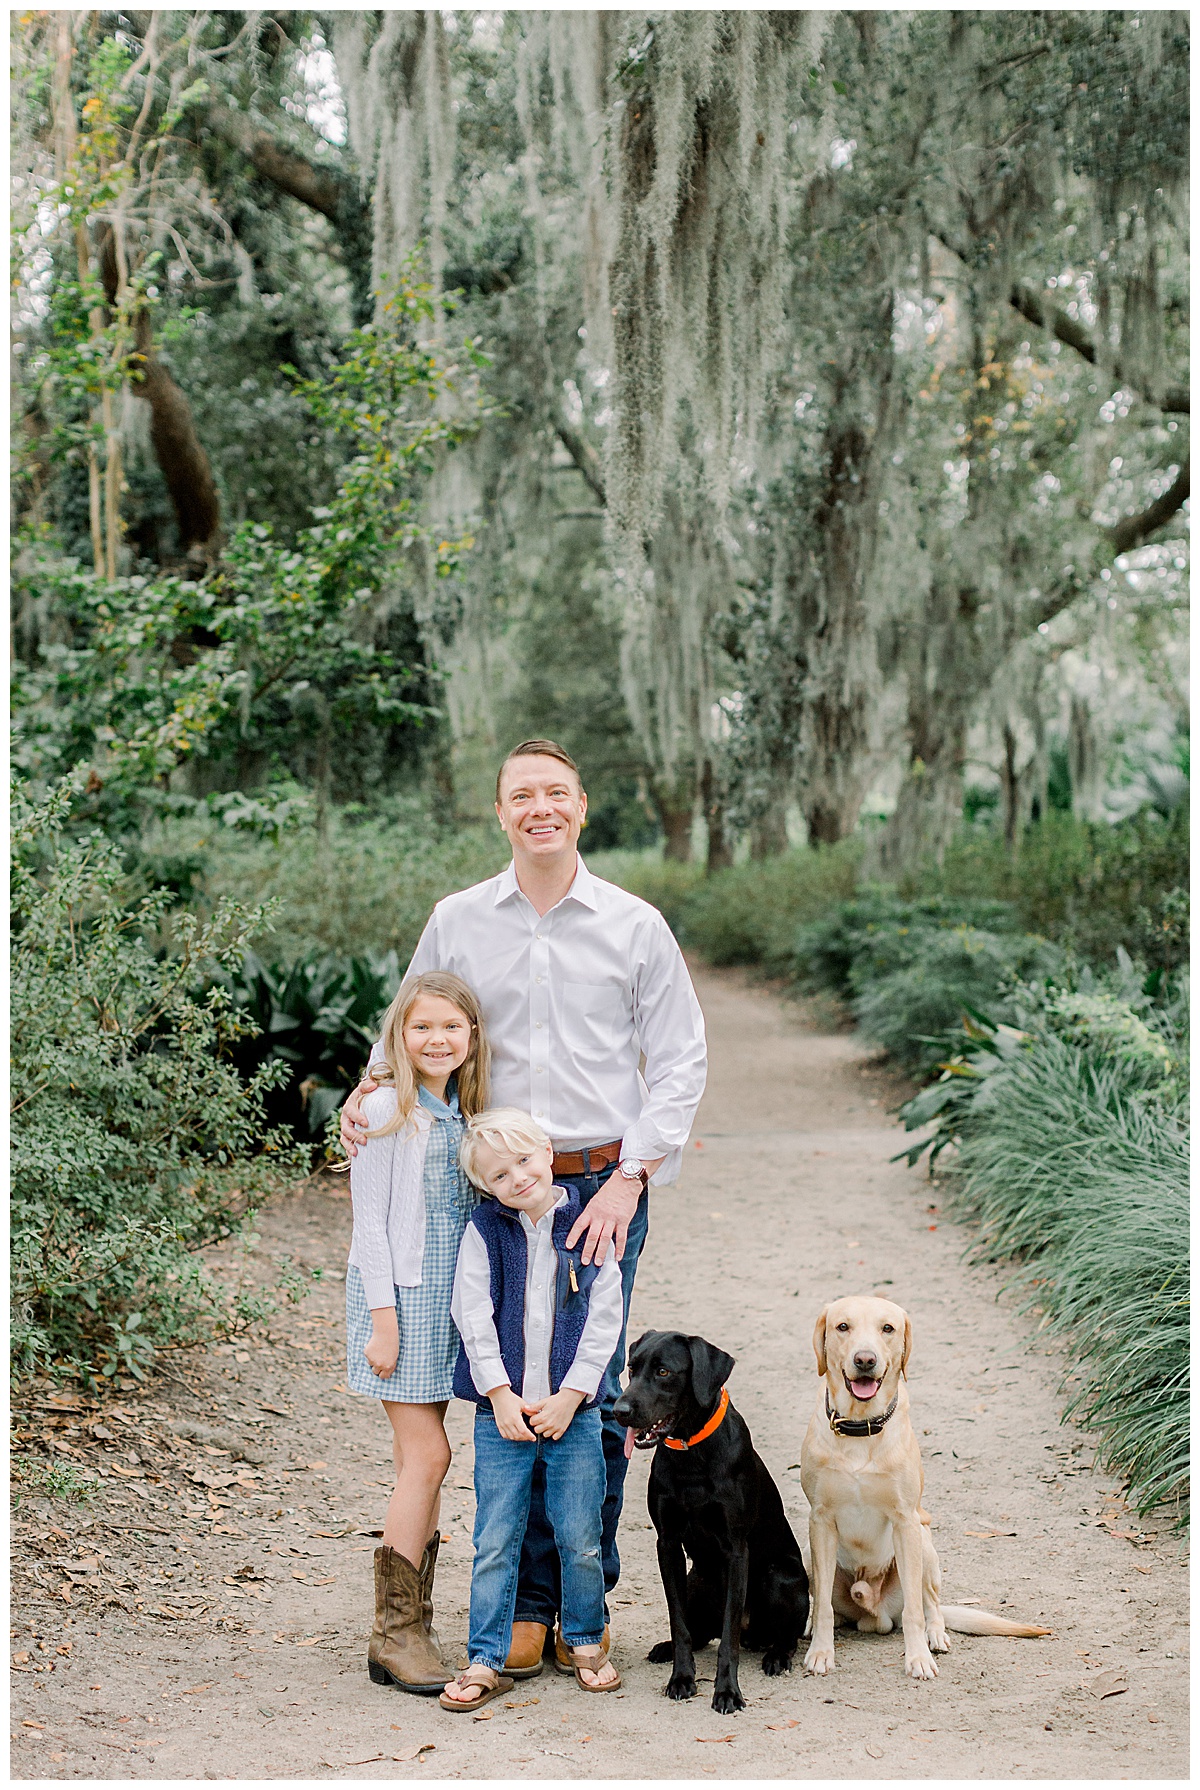 The Speir Family - Family Portraits in Charleston Gardens | Charleston Family Photographer | Candice Adelle Photography_0143.jpg